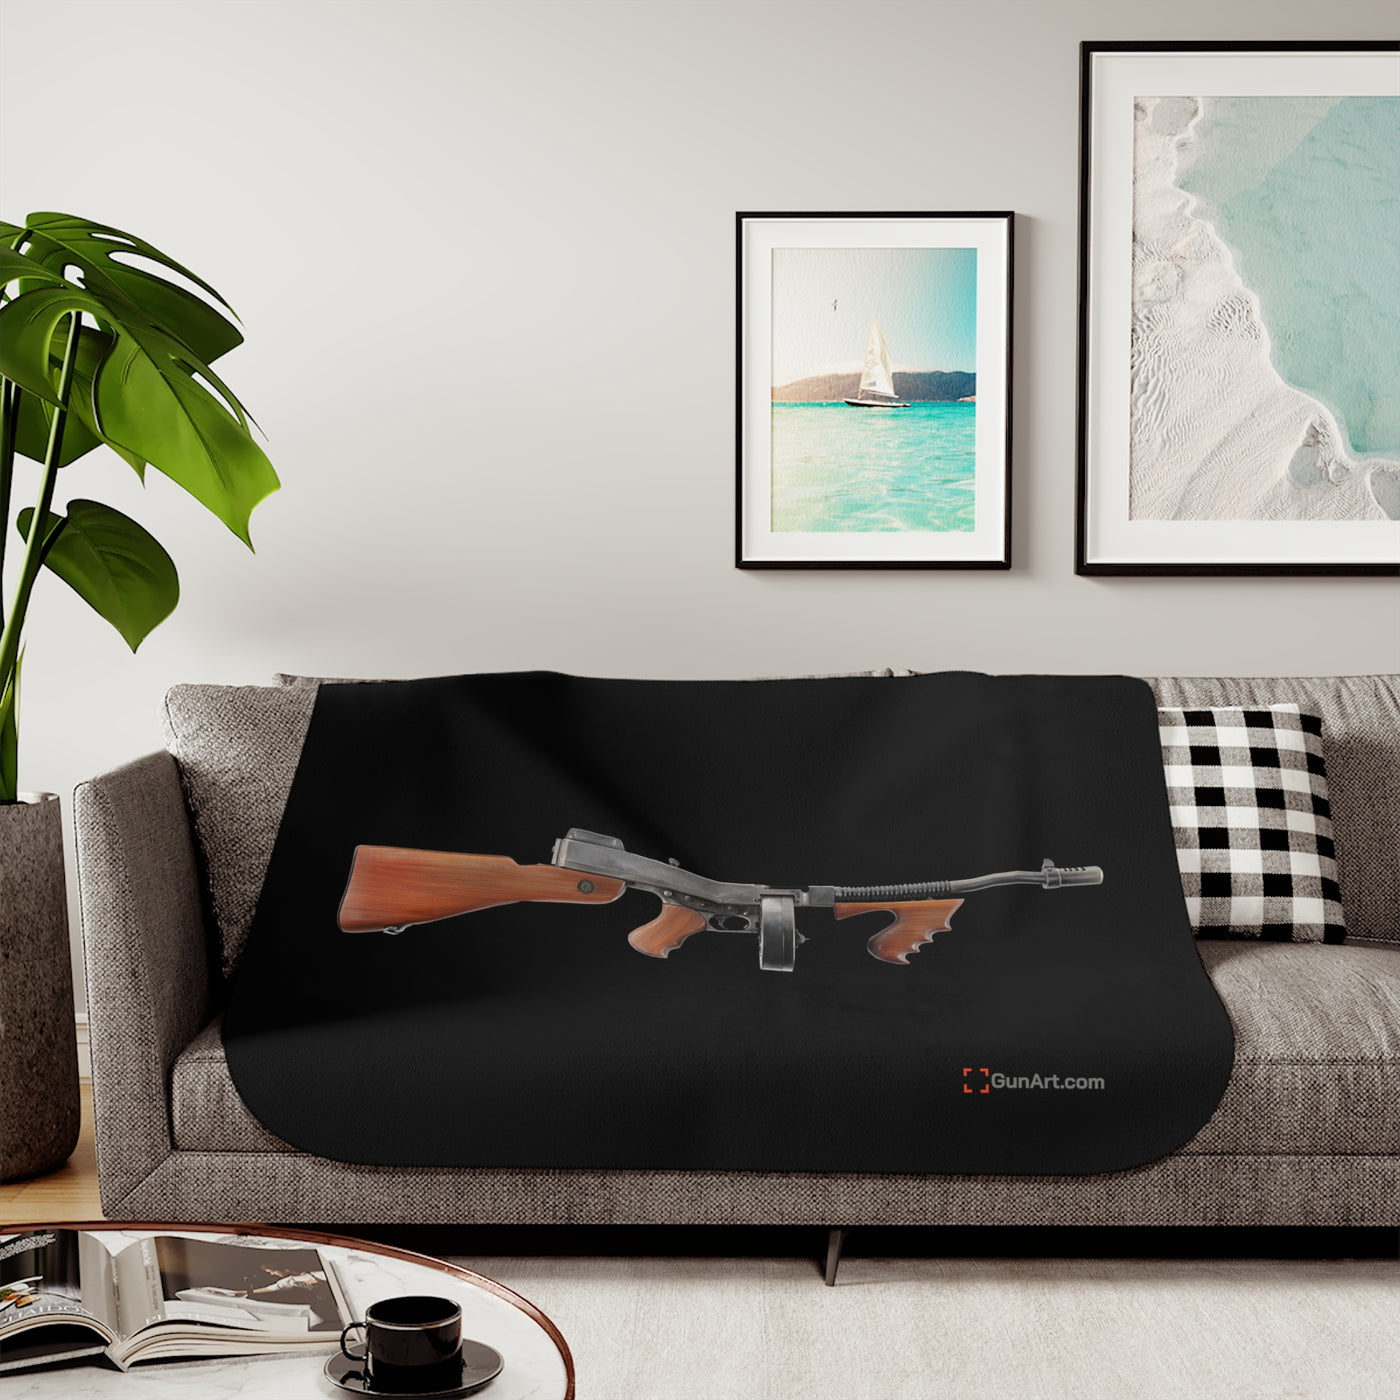 The “OG” Mobster Machine Gun Sherpa Blanket - Black Background - Just The Piece